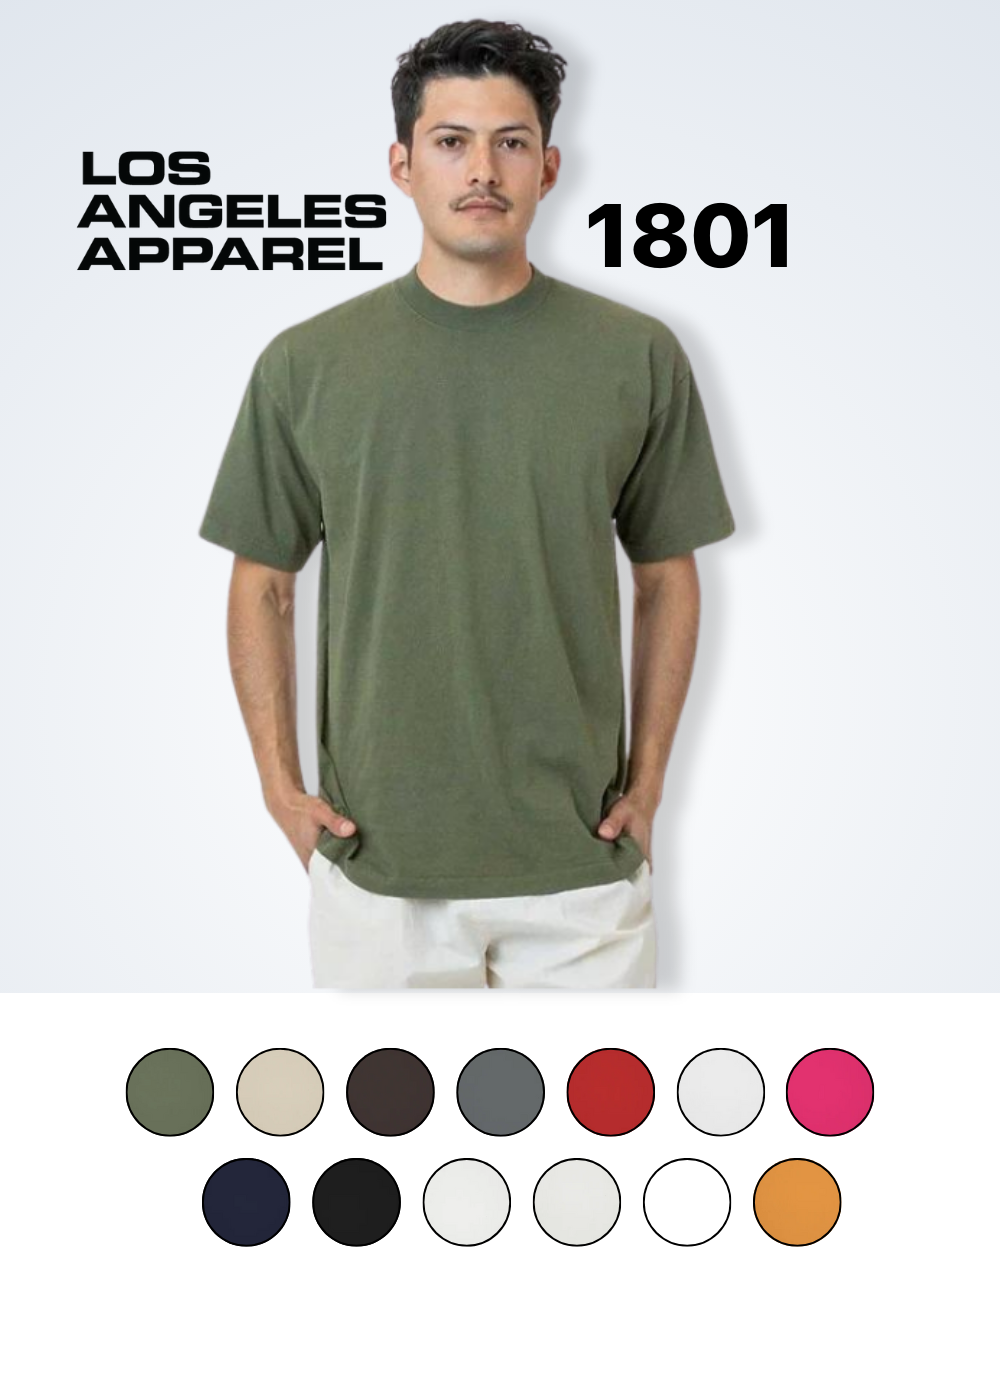 Apparel, T-Shirt